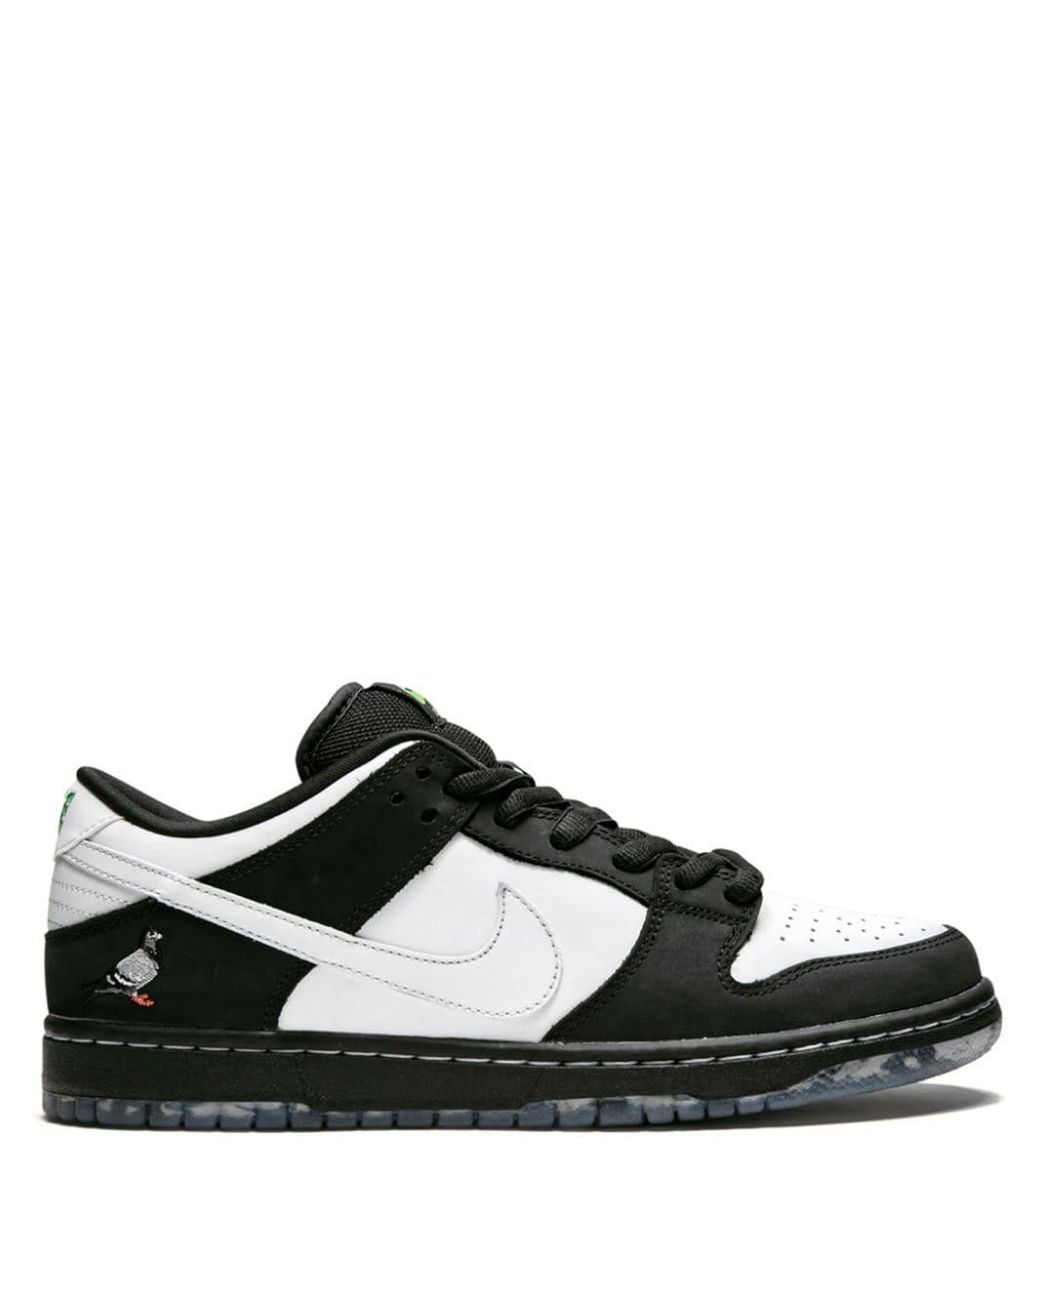 Nike Leather Sb Dunk Low Pro Og Qs 'panda Pigeon' Shoes in Black/White  (Black) for Men - Save 53% | Lyst